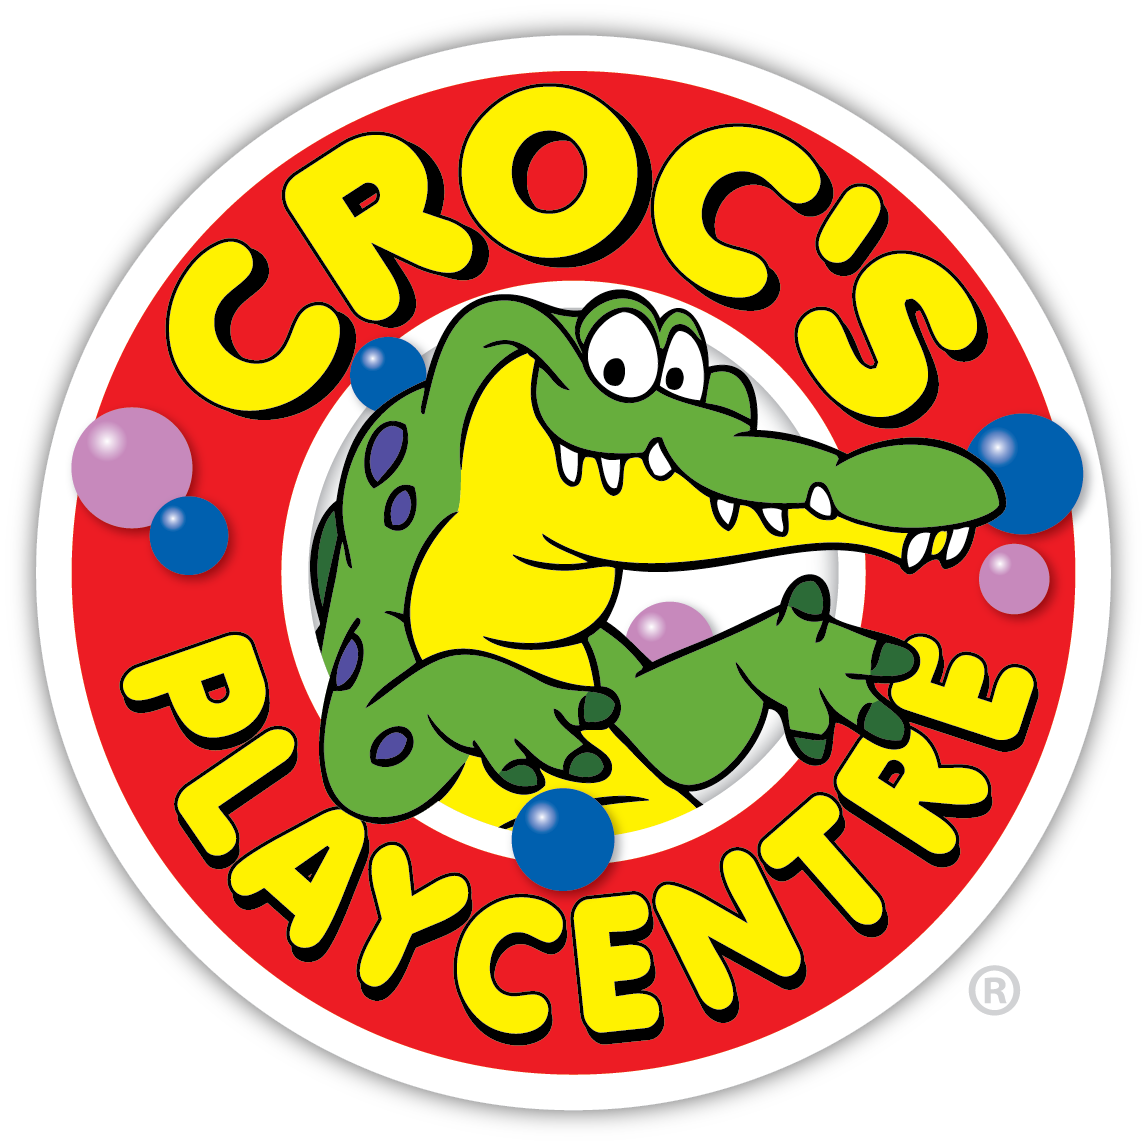 Croc's Franchising